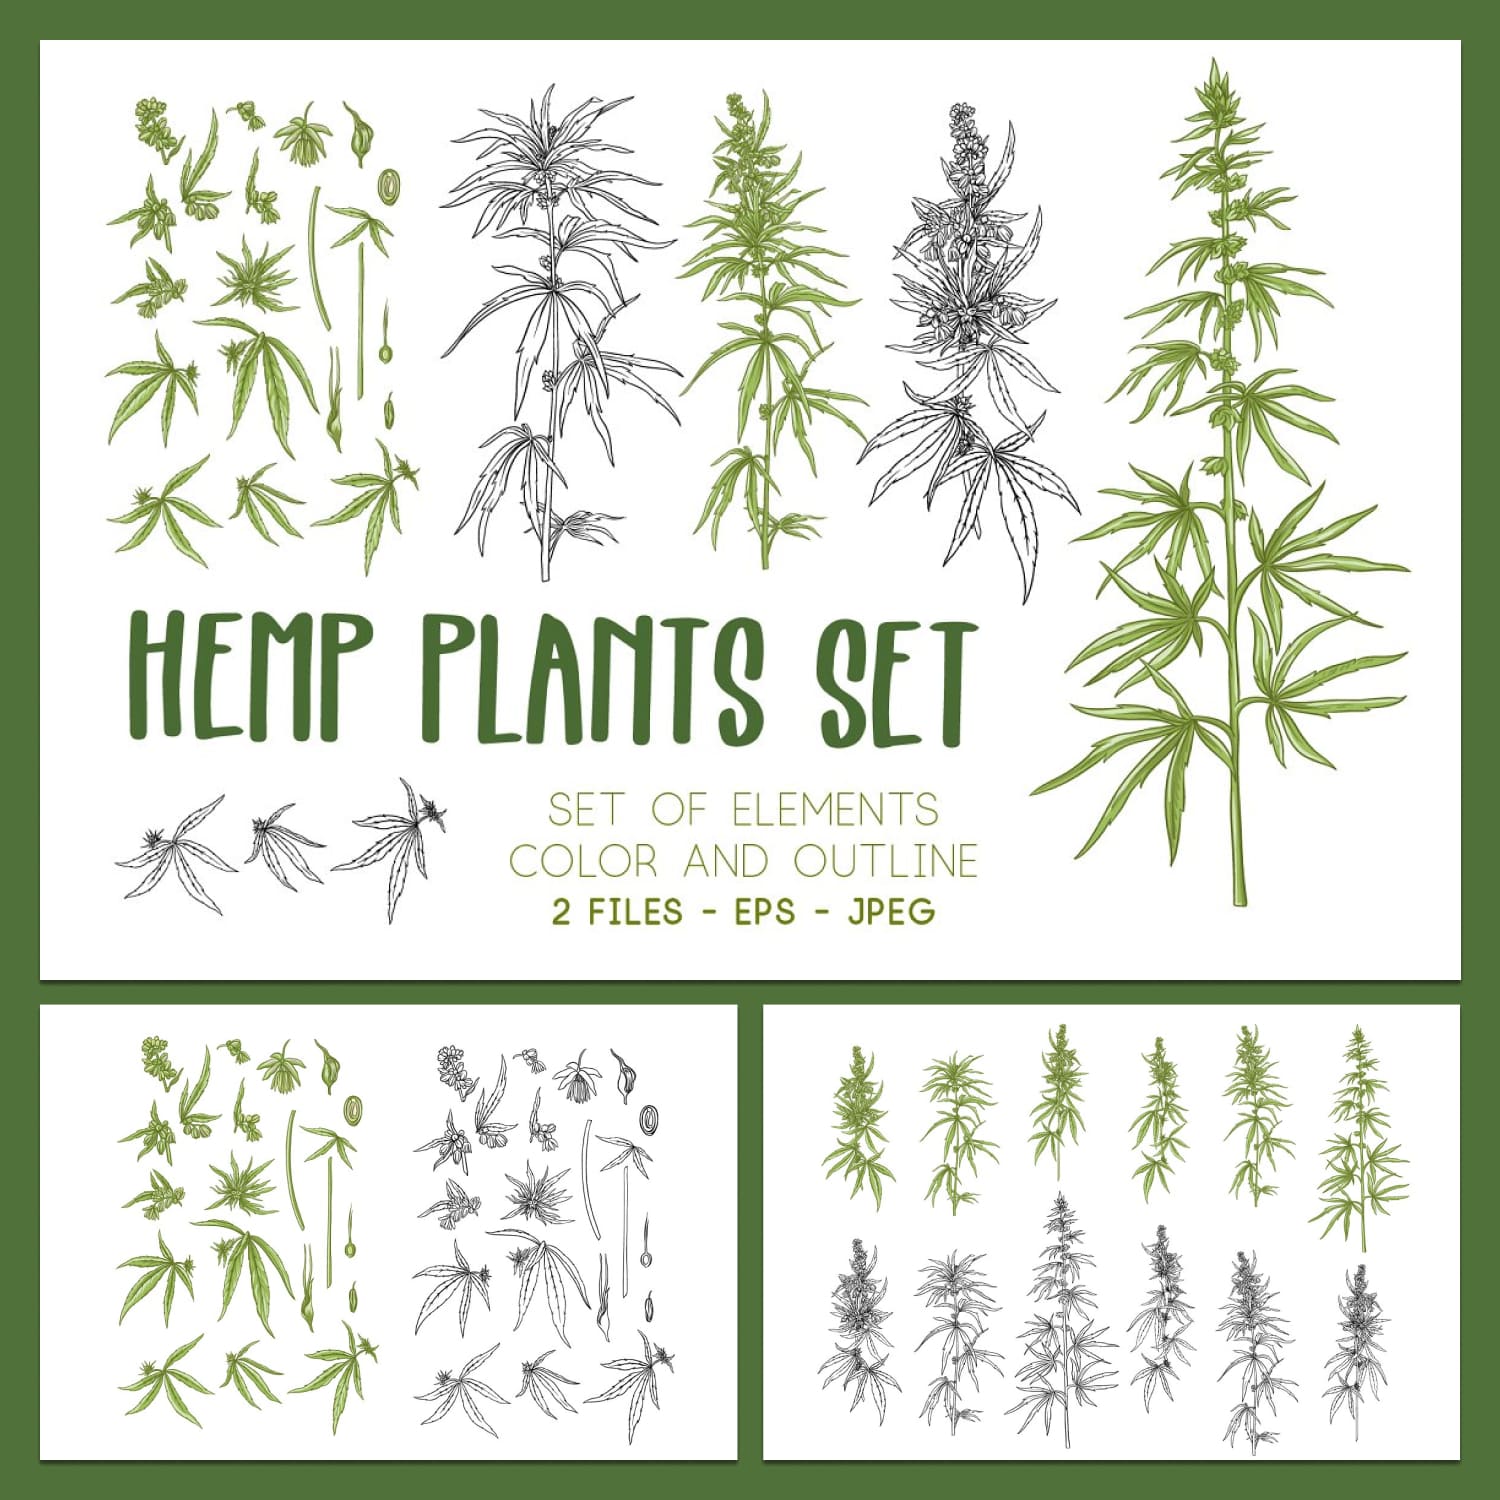 Hemp Plants Set. Color And Outline.